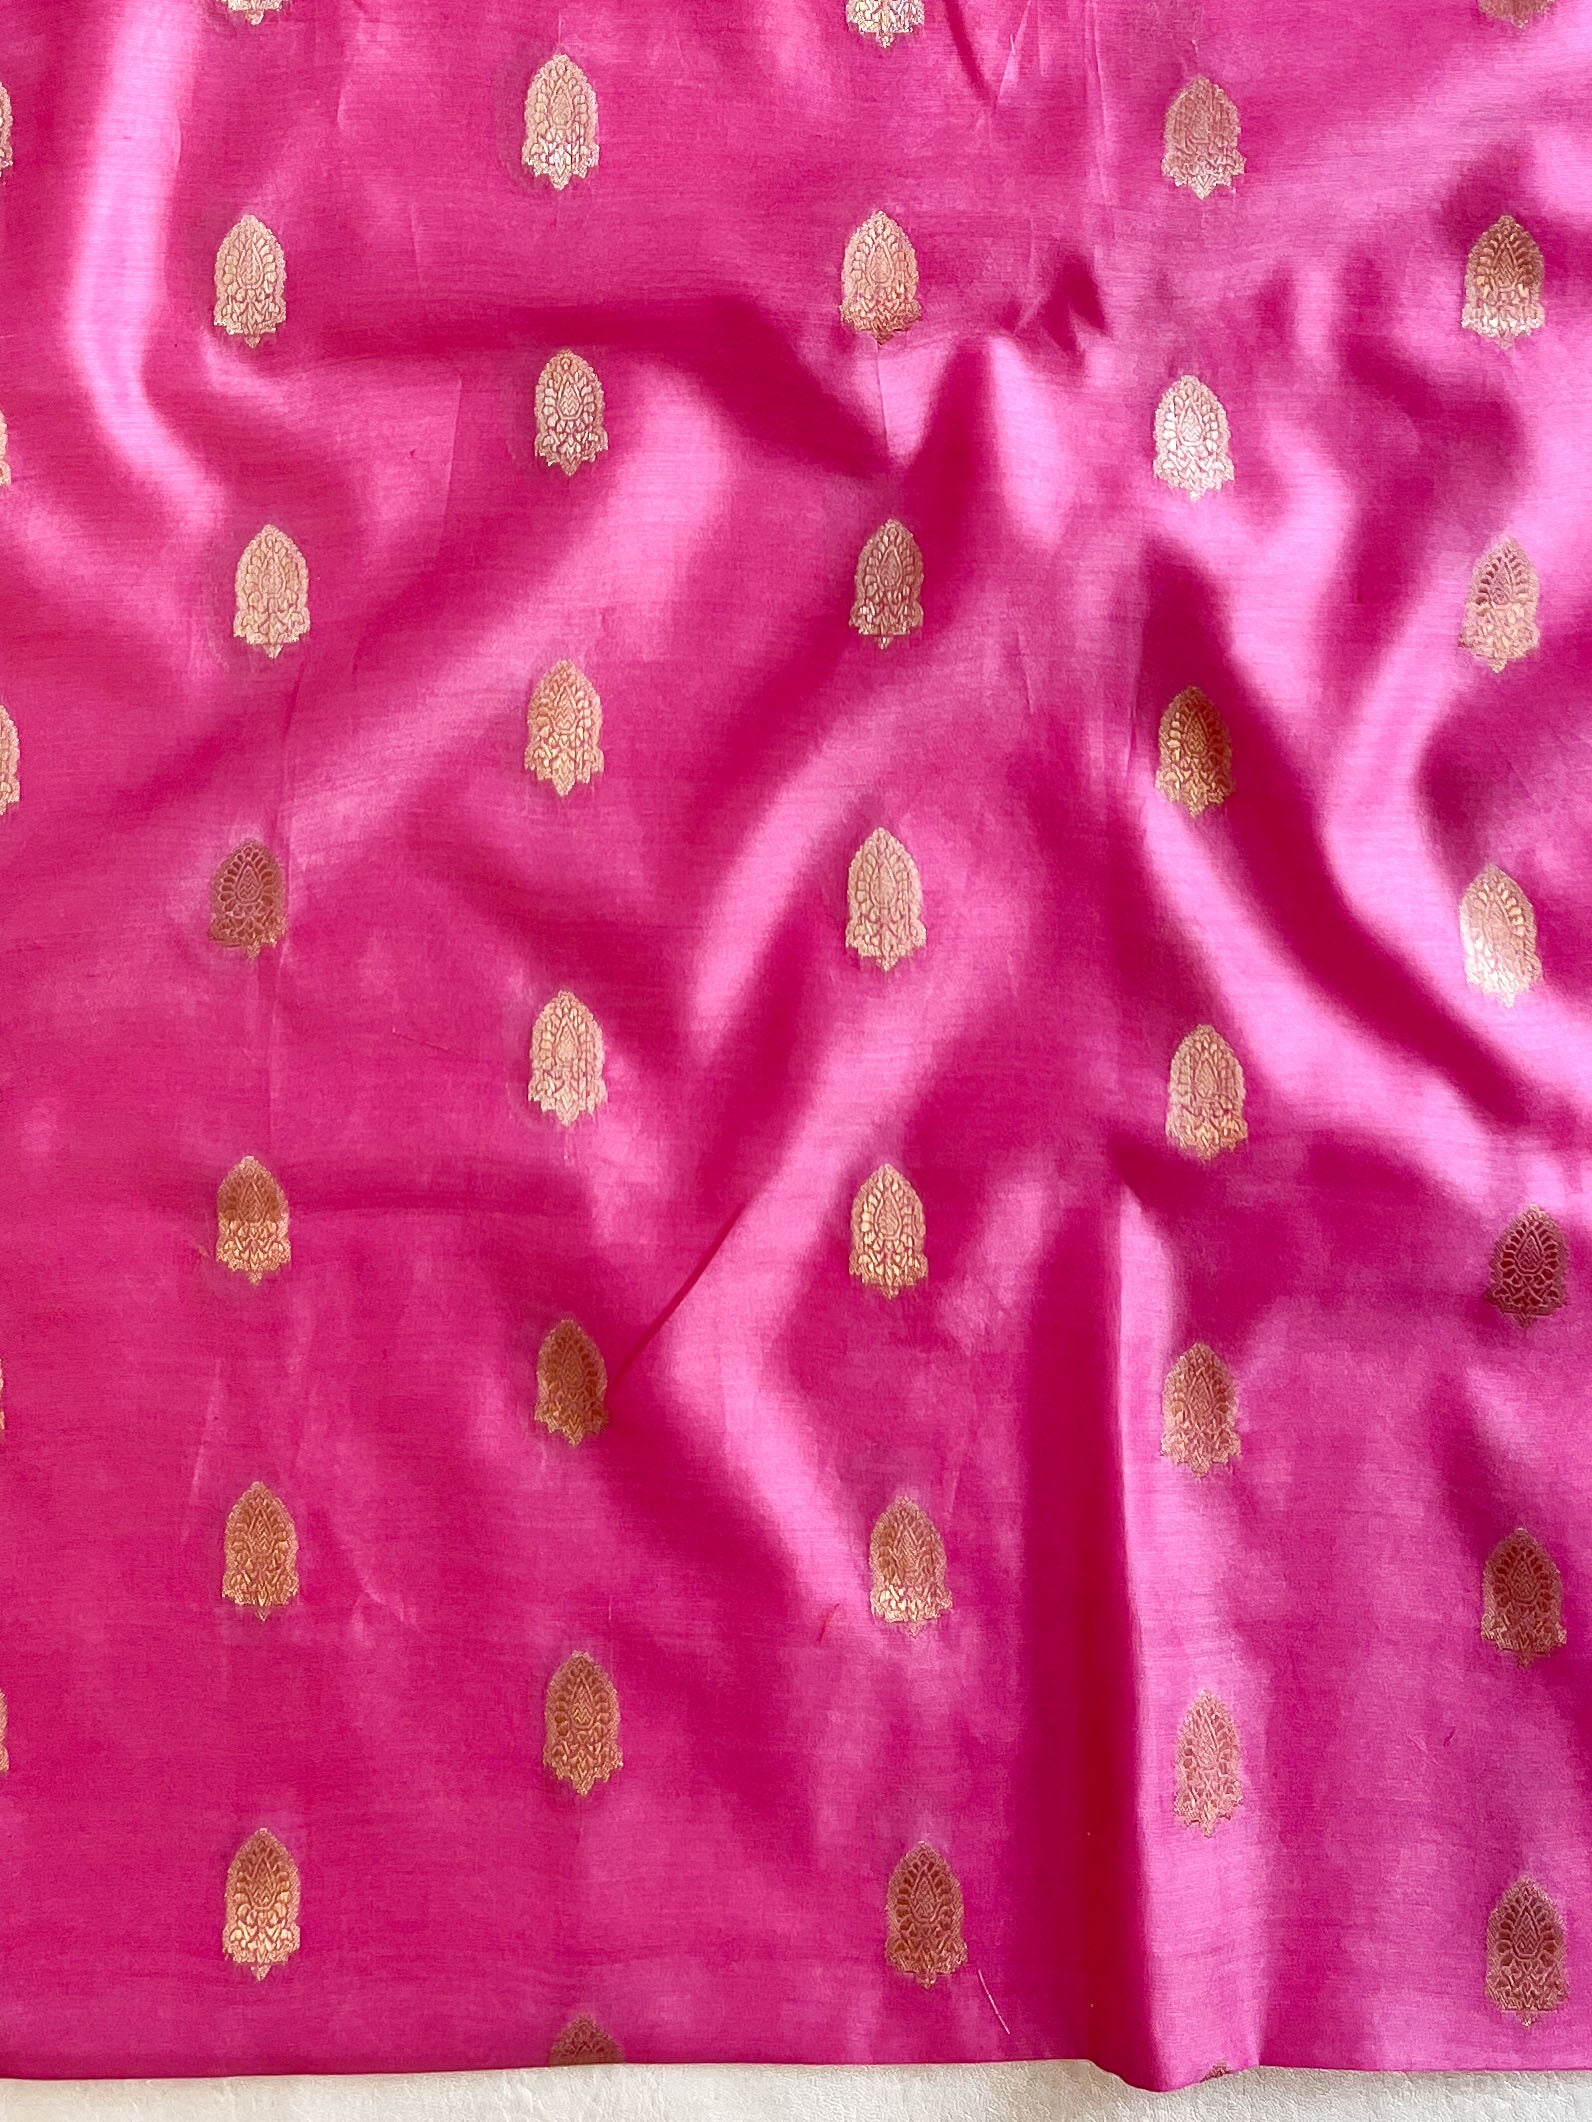 Banarasee Pure Chanderi Silk Zari Buti Salwar Kameez Set-Pink & Green